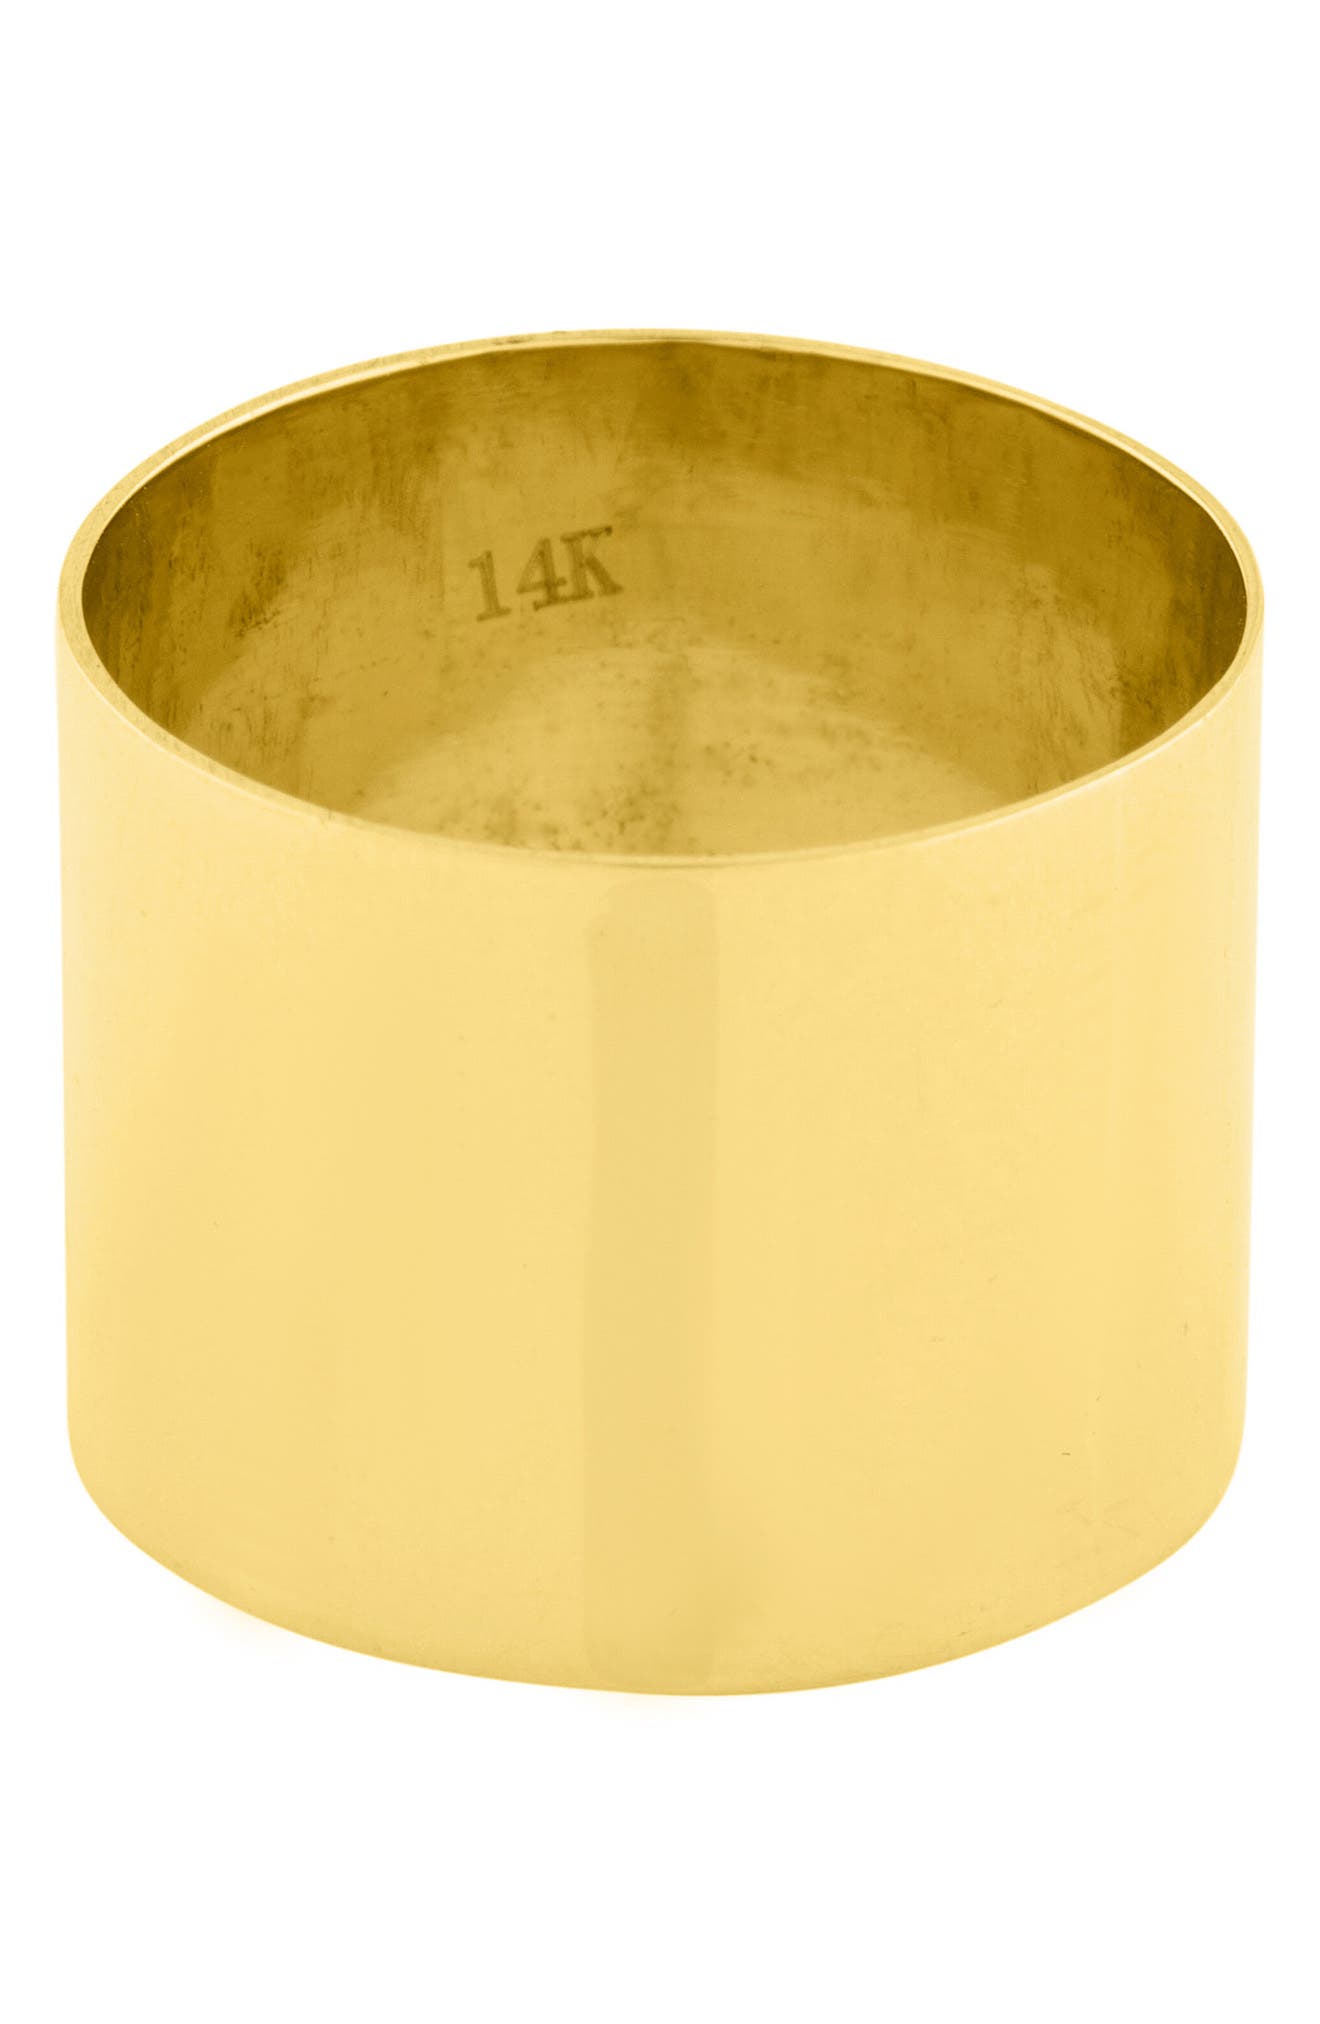 Adornia Fine 14k Yellow Gold 15mm Cigar Band Ring